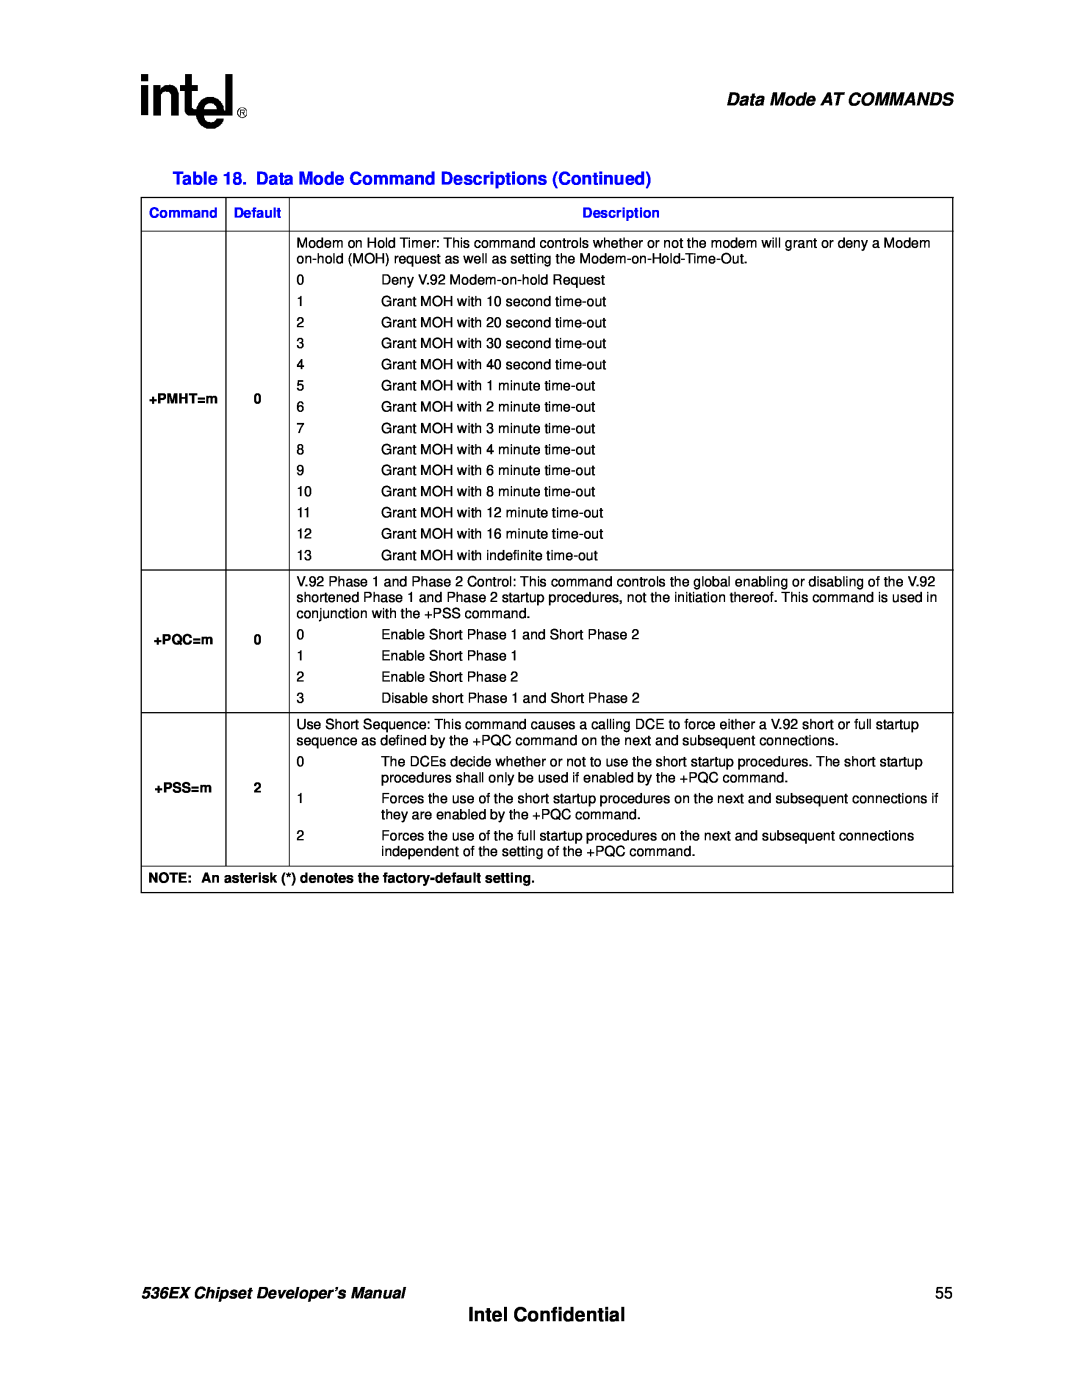 Intel manual Intel Confidential, Data Mode AT COMMANDS, 536EX Chipset Developer’s Manual 